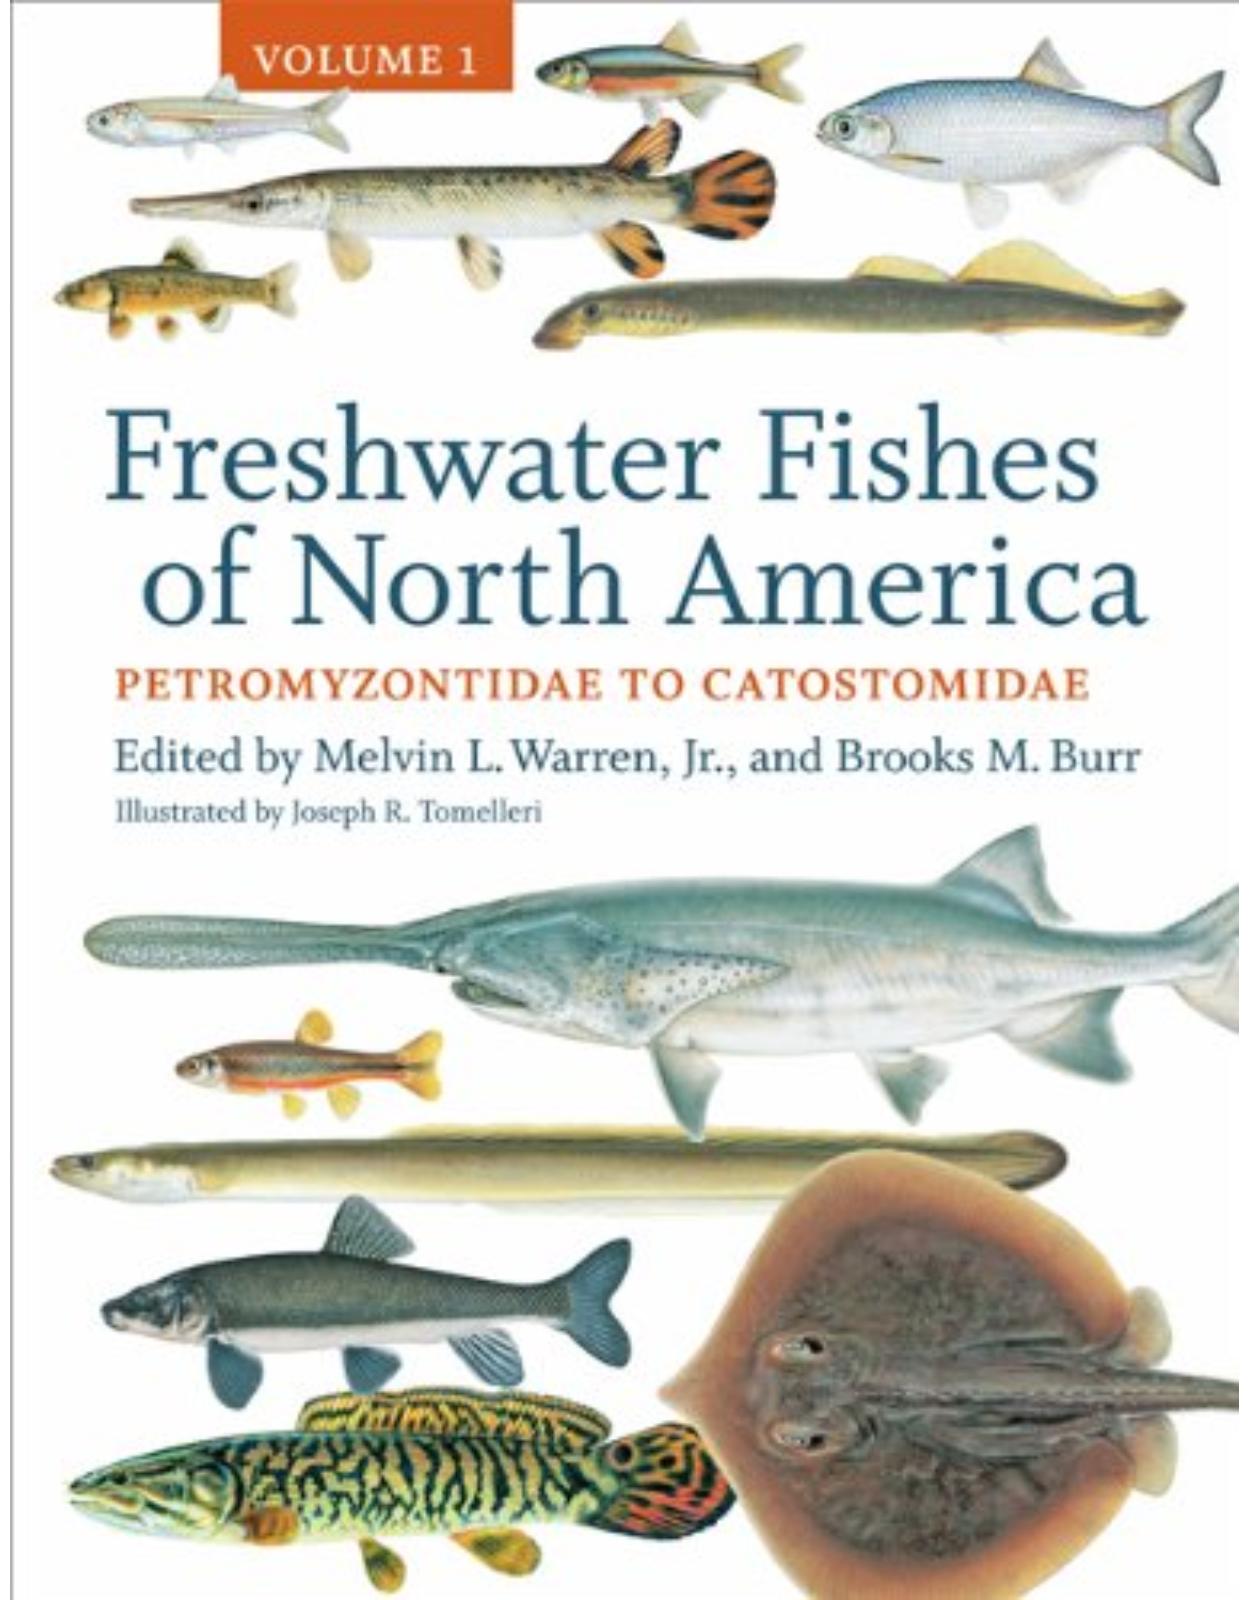 Freshwater Fishes of North America, Volume 1: Petromyzontidae to Catostomidae